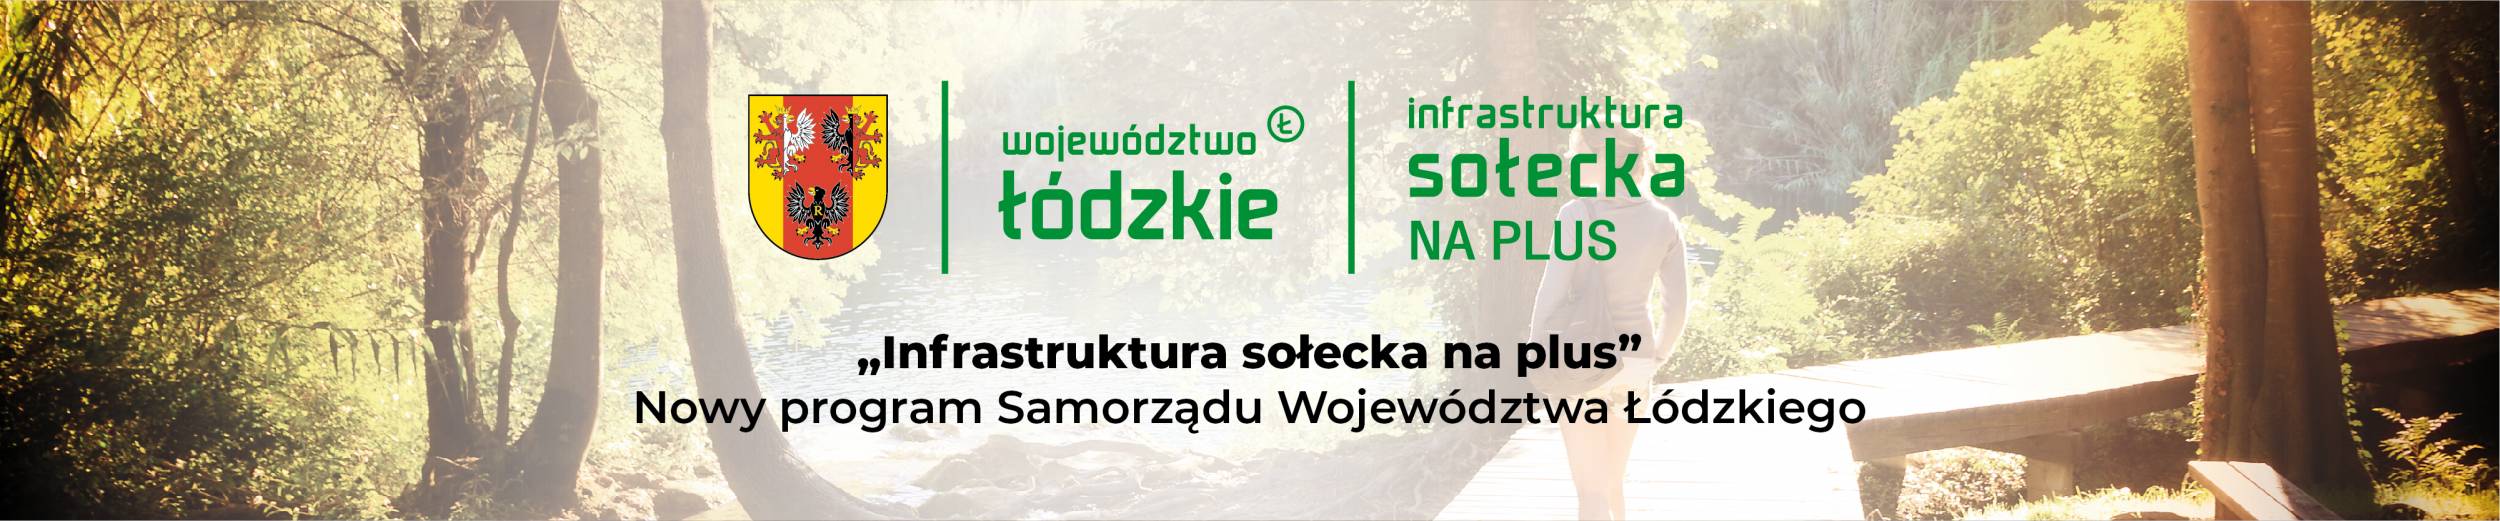 infrastruktura_soectwo_2022_slajder_FB-02_1